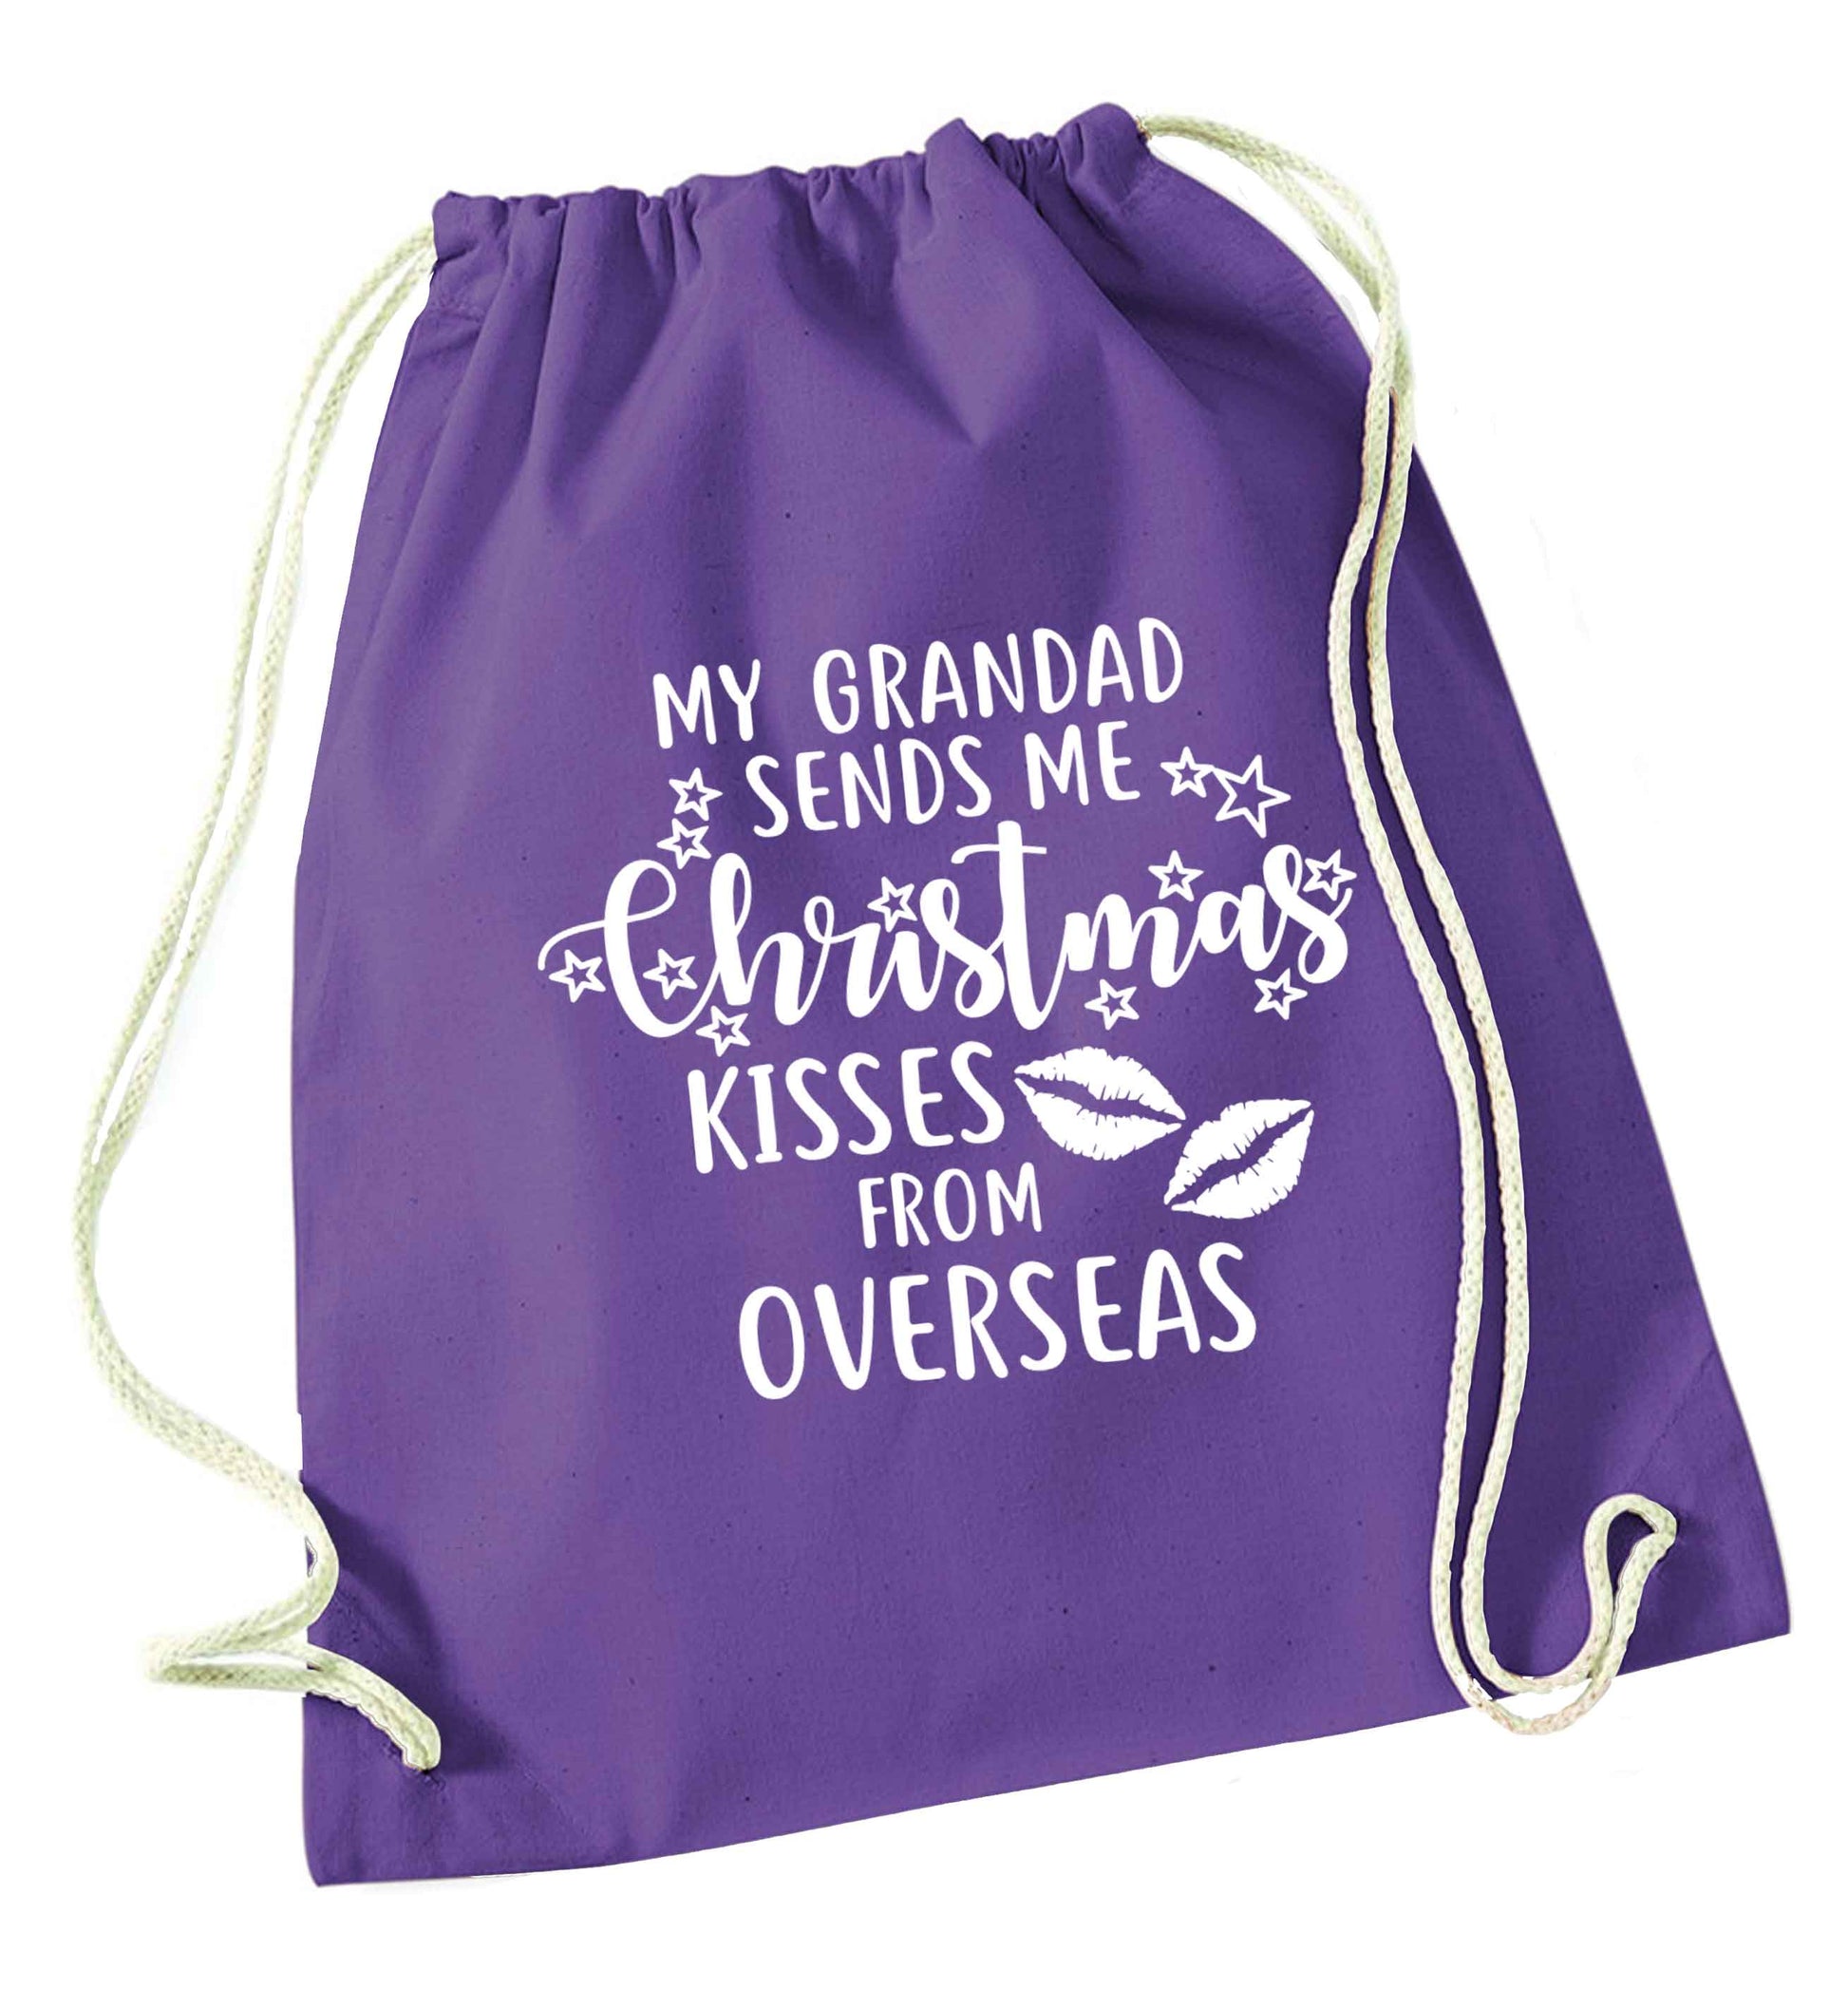 Grandad Christmas Kisses Overseas purple drawstring bag